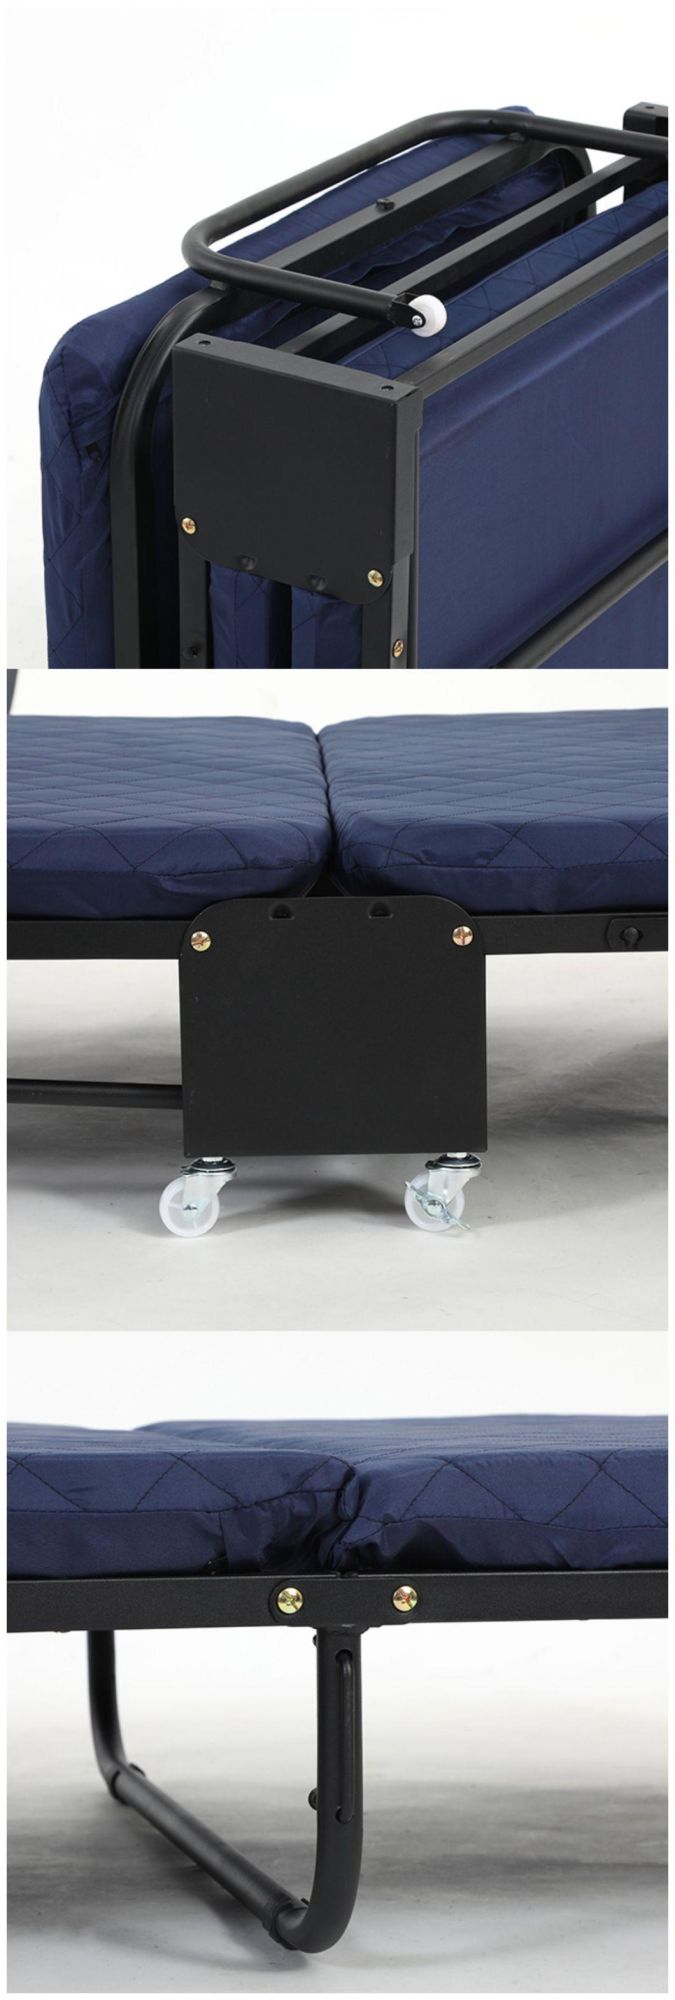 Furniture Metal Hospital Folding Chair Fold Hotel Extra Sofa Bed